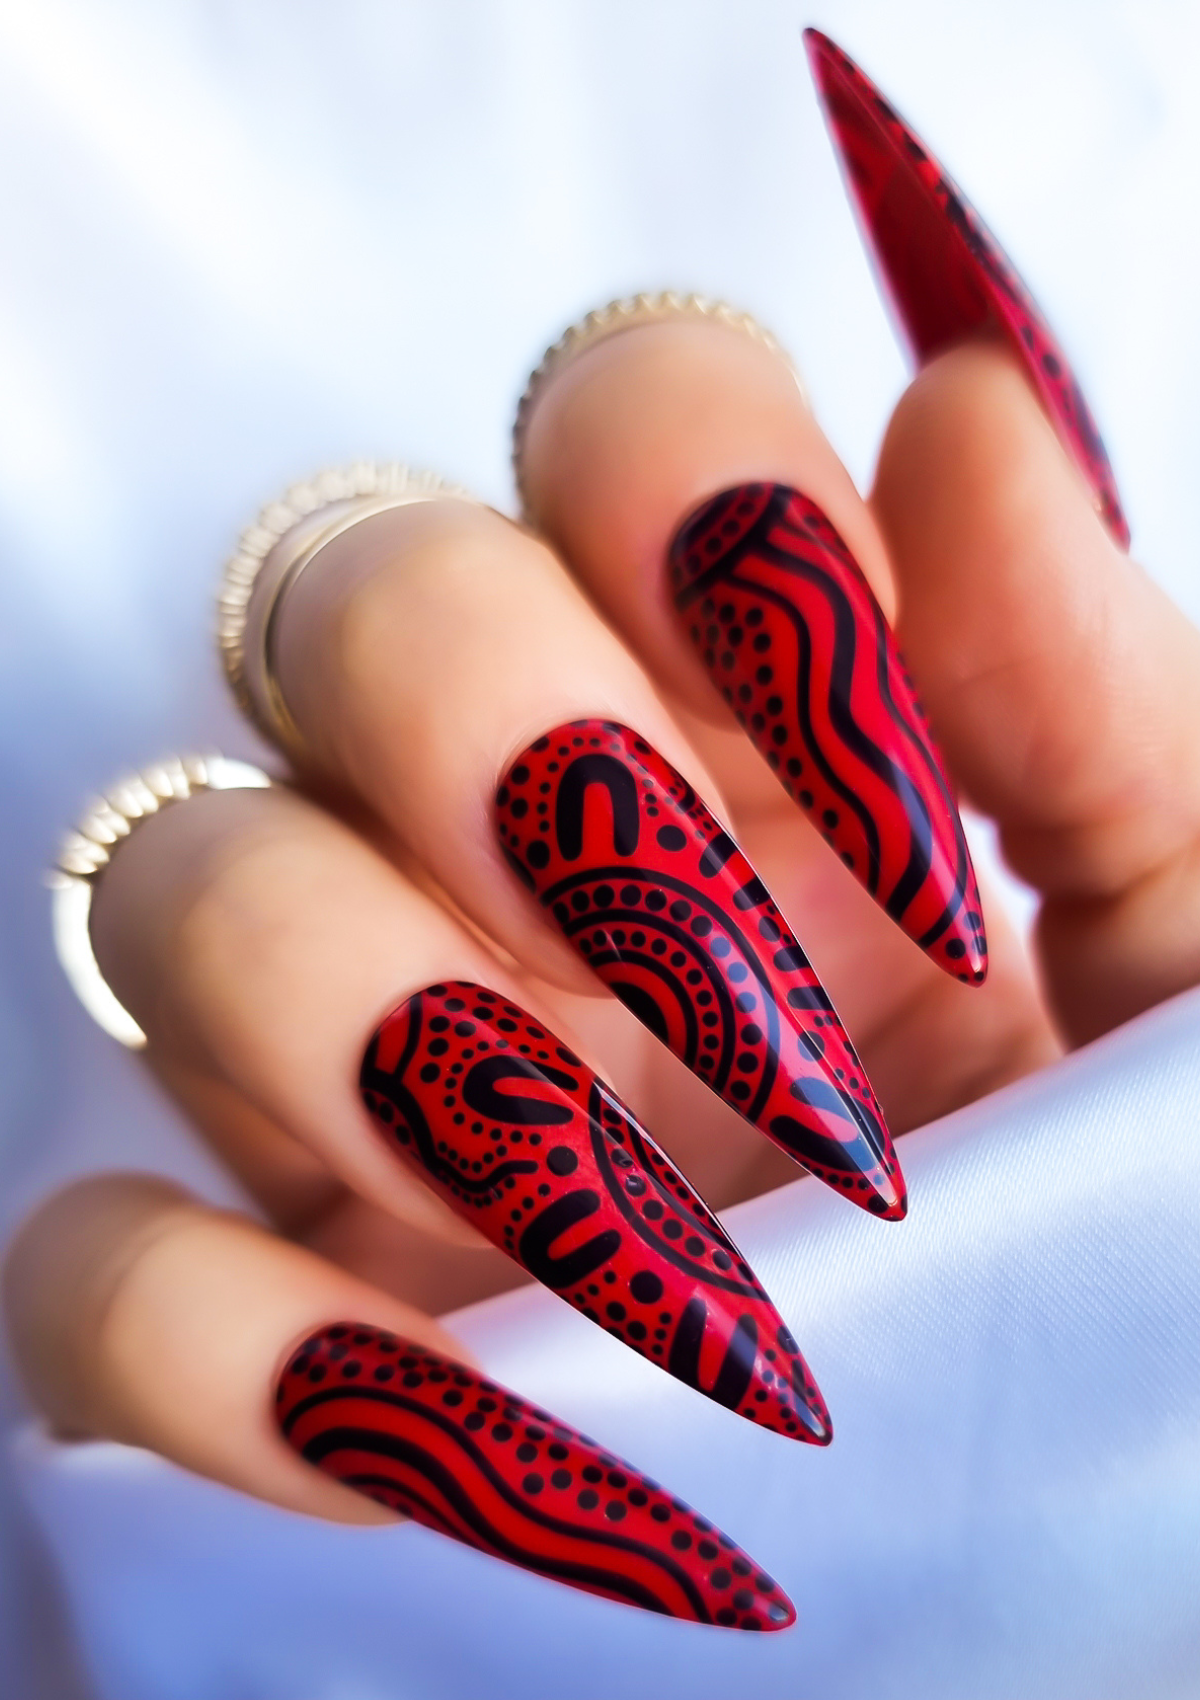 Red nail with black Aboriginal Australian nail art designs